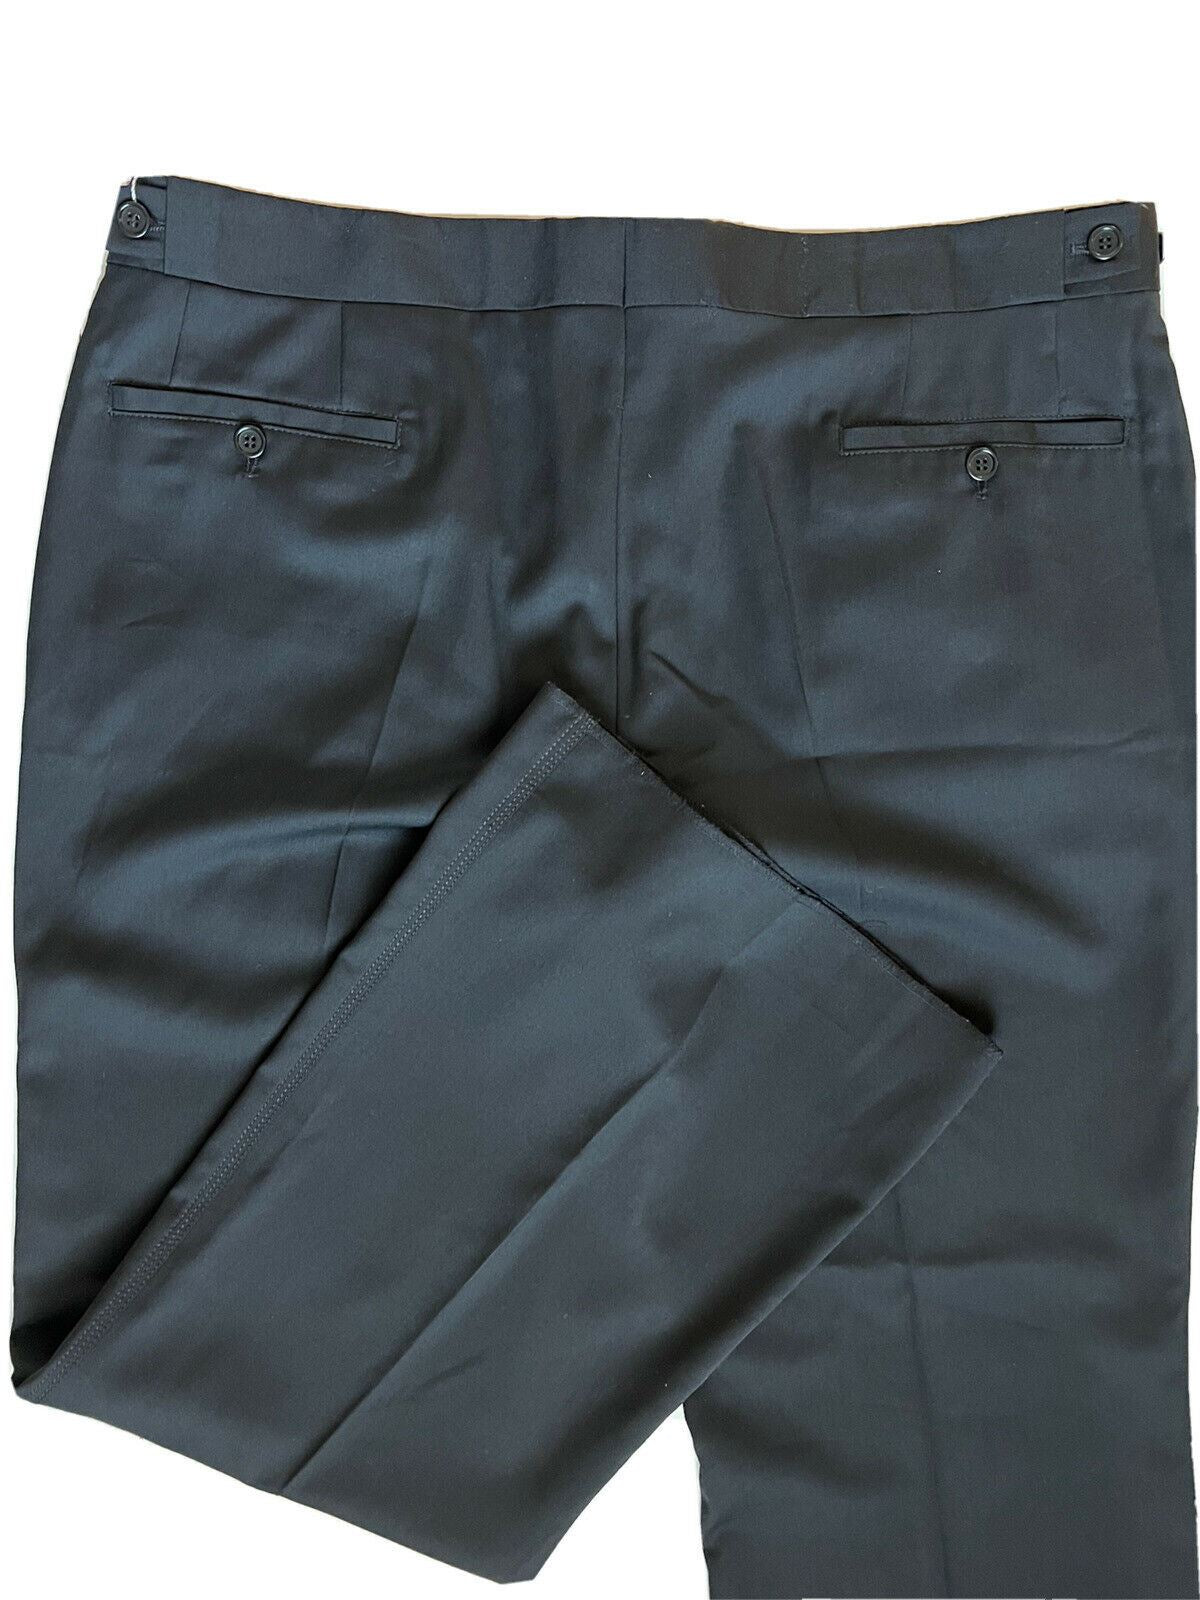 NWT $595 Ralph Lauren Purple Label Men's Silk/Linen Black Dress Pants 38 US IT